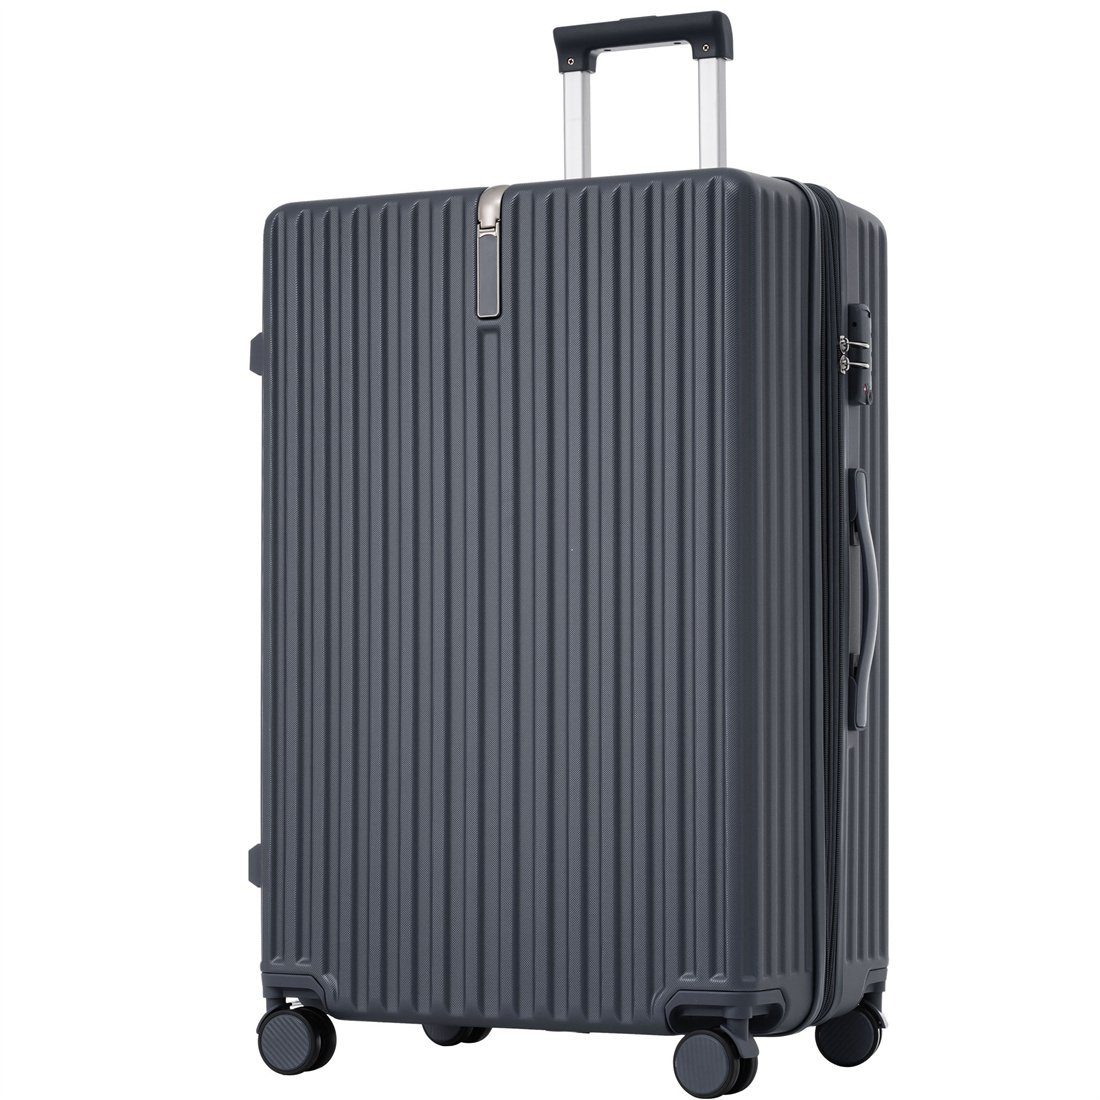 DÖRÖY Koffer Hartschalen-Koffer, Reisekoffer, Handgepäck 4 Rollen, 65*43*28cm, grau